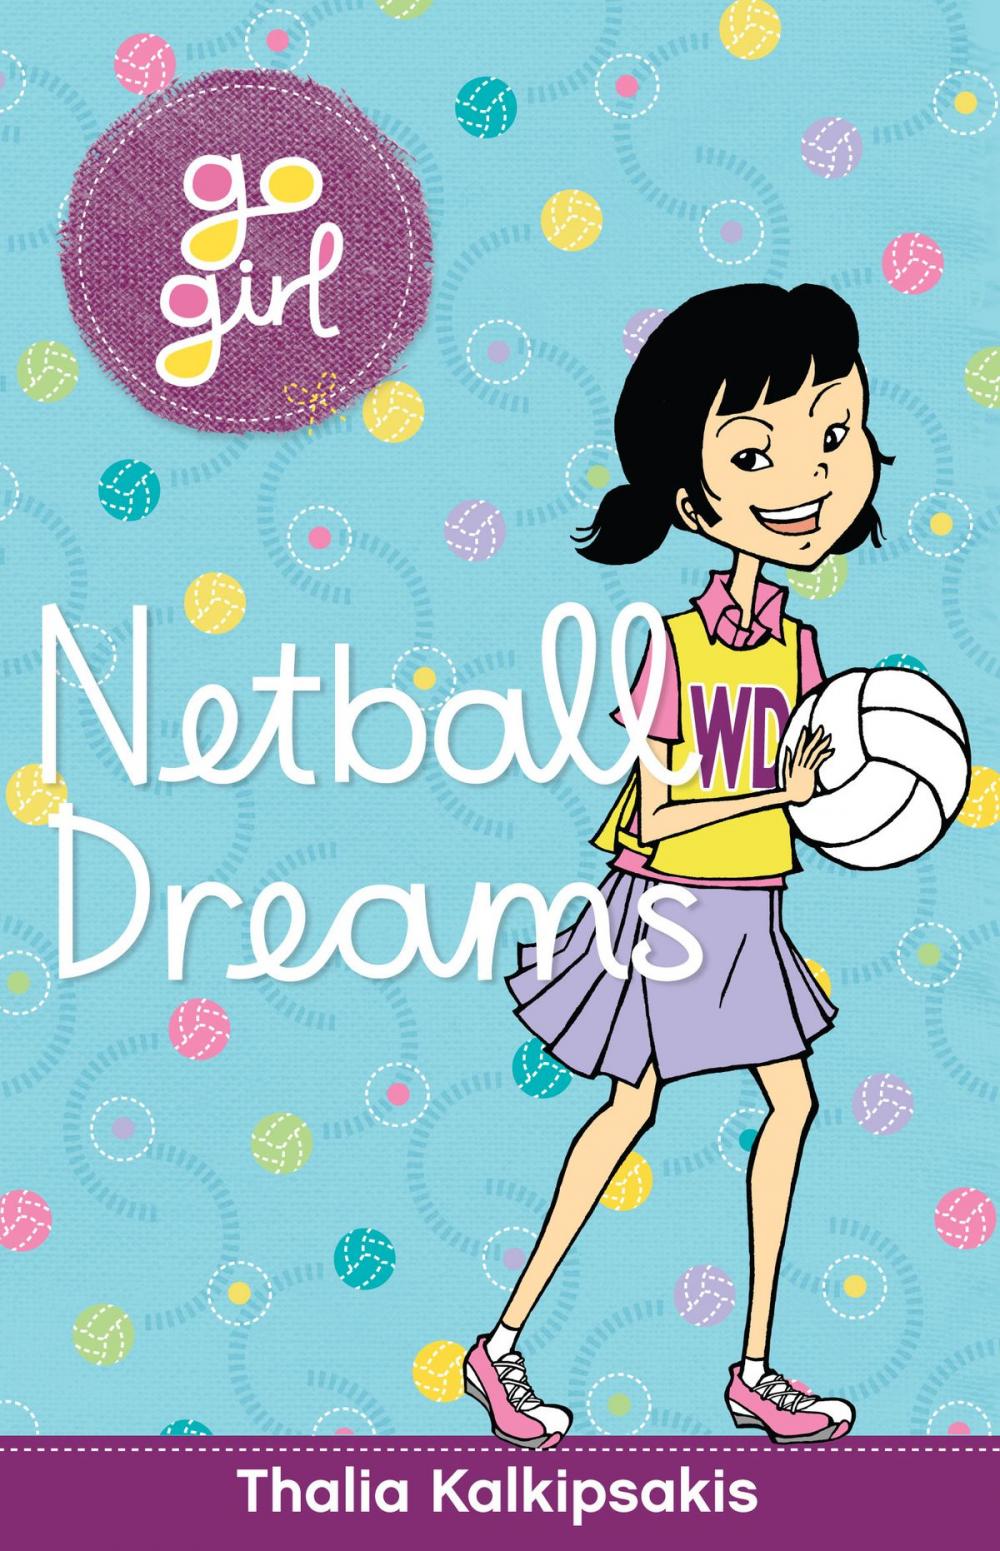 Big bigCover of Go Girl: Netball Dreams